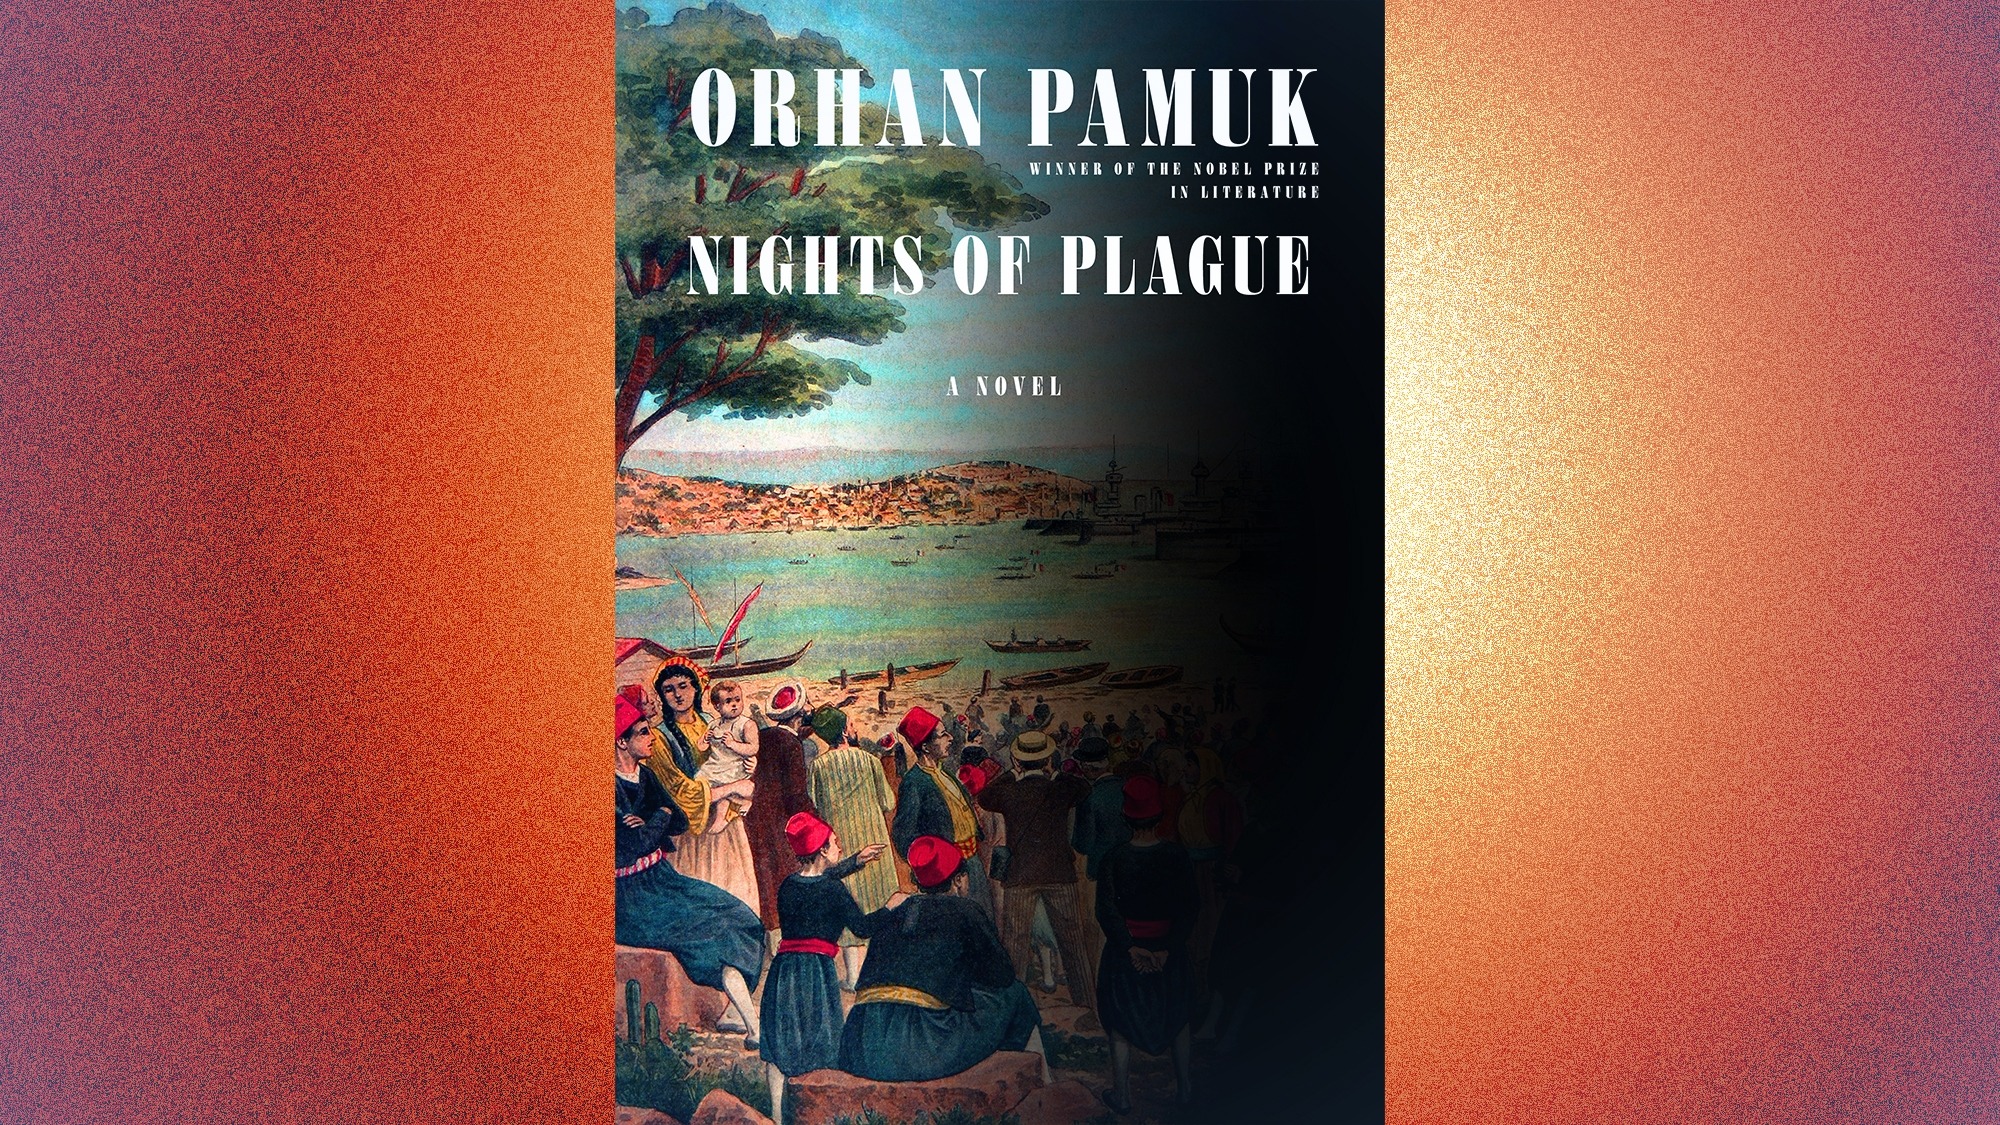 Nights Of Plague by Orhan Pamuk, translated by Ekin Oklap (October 4, Knopf)